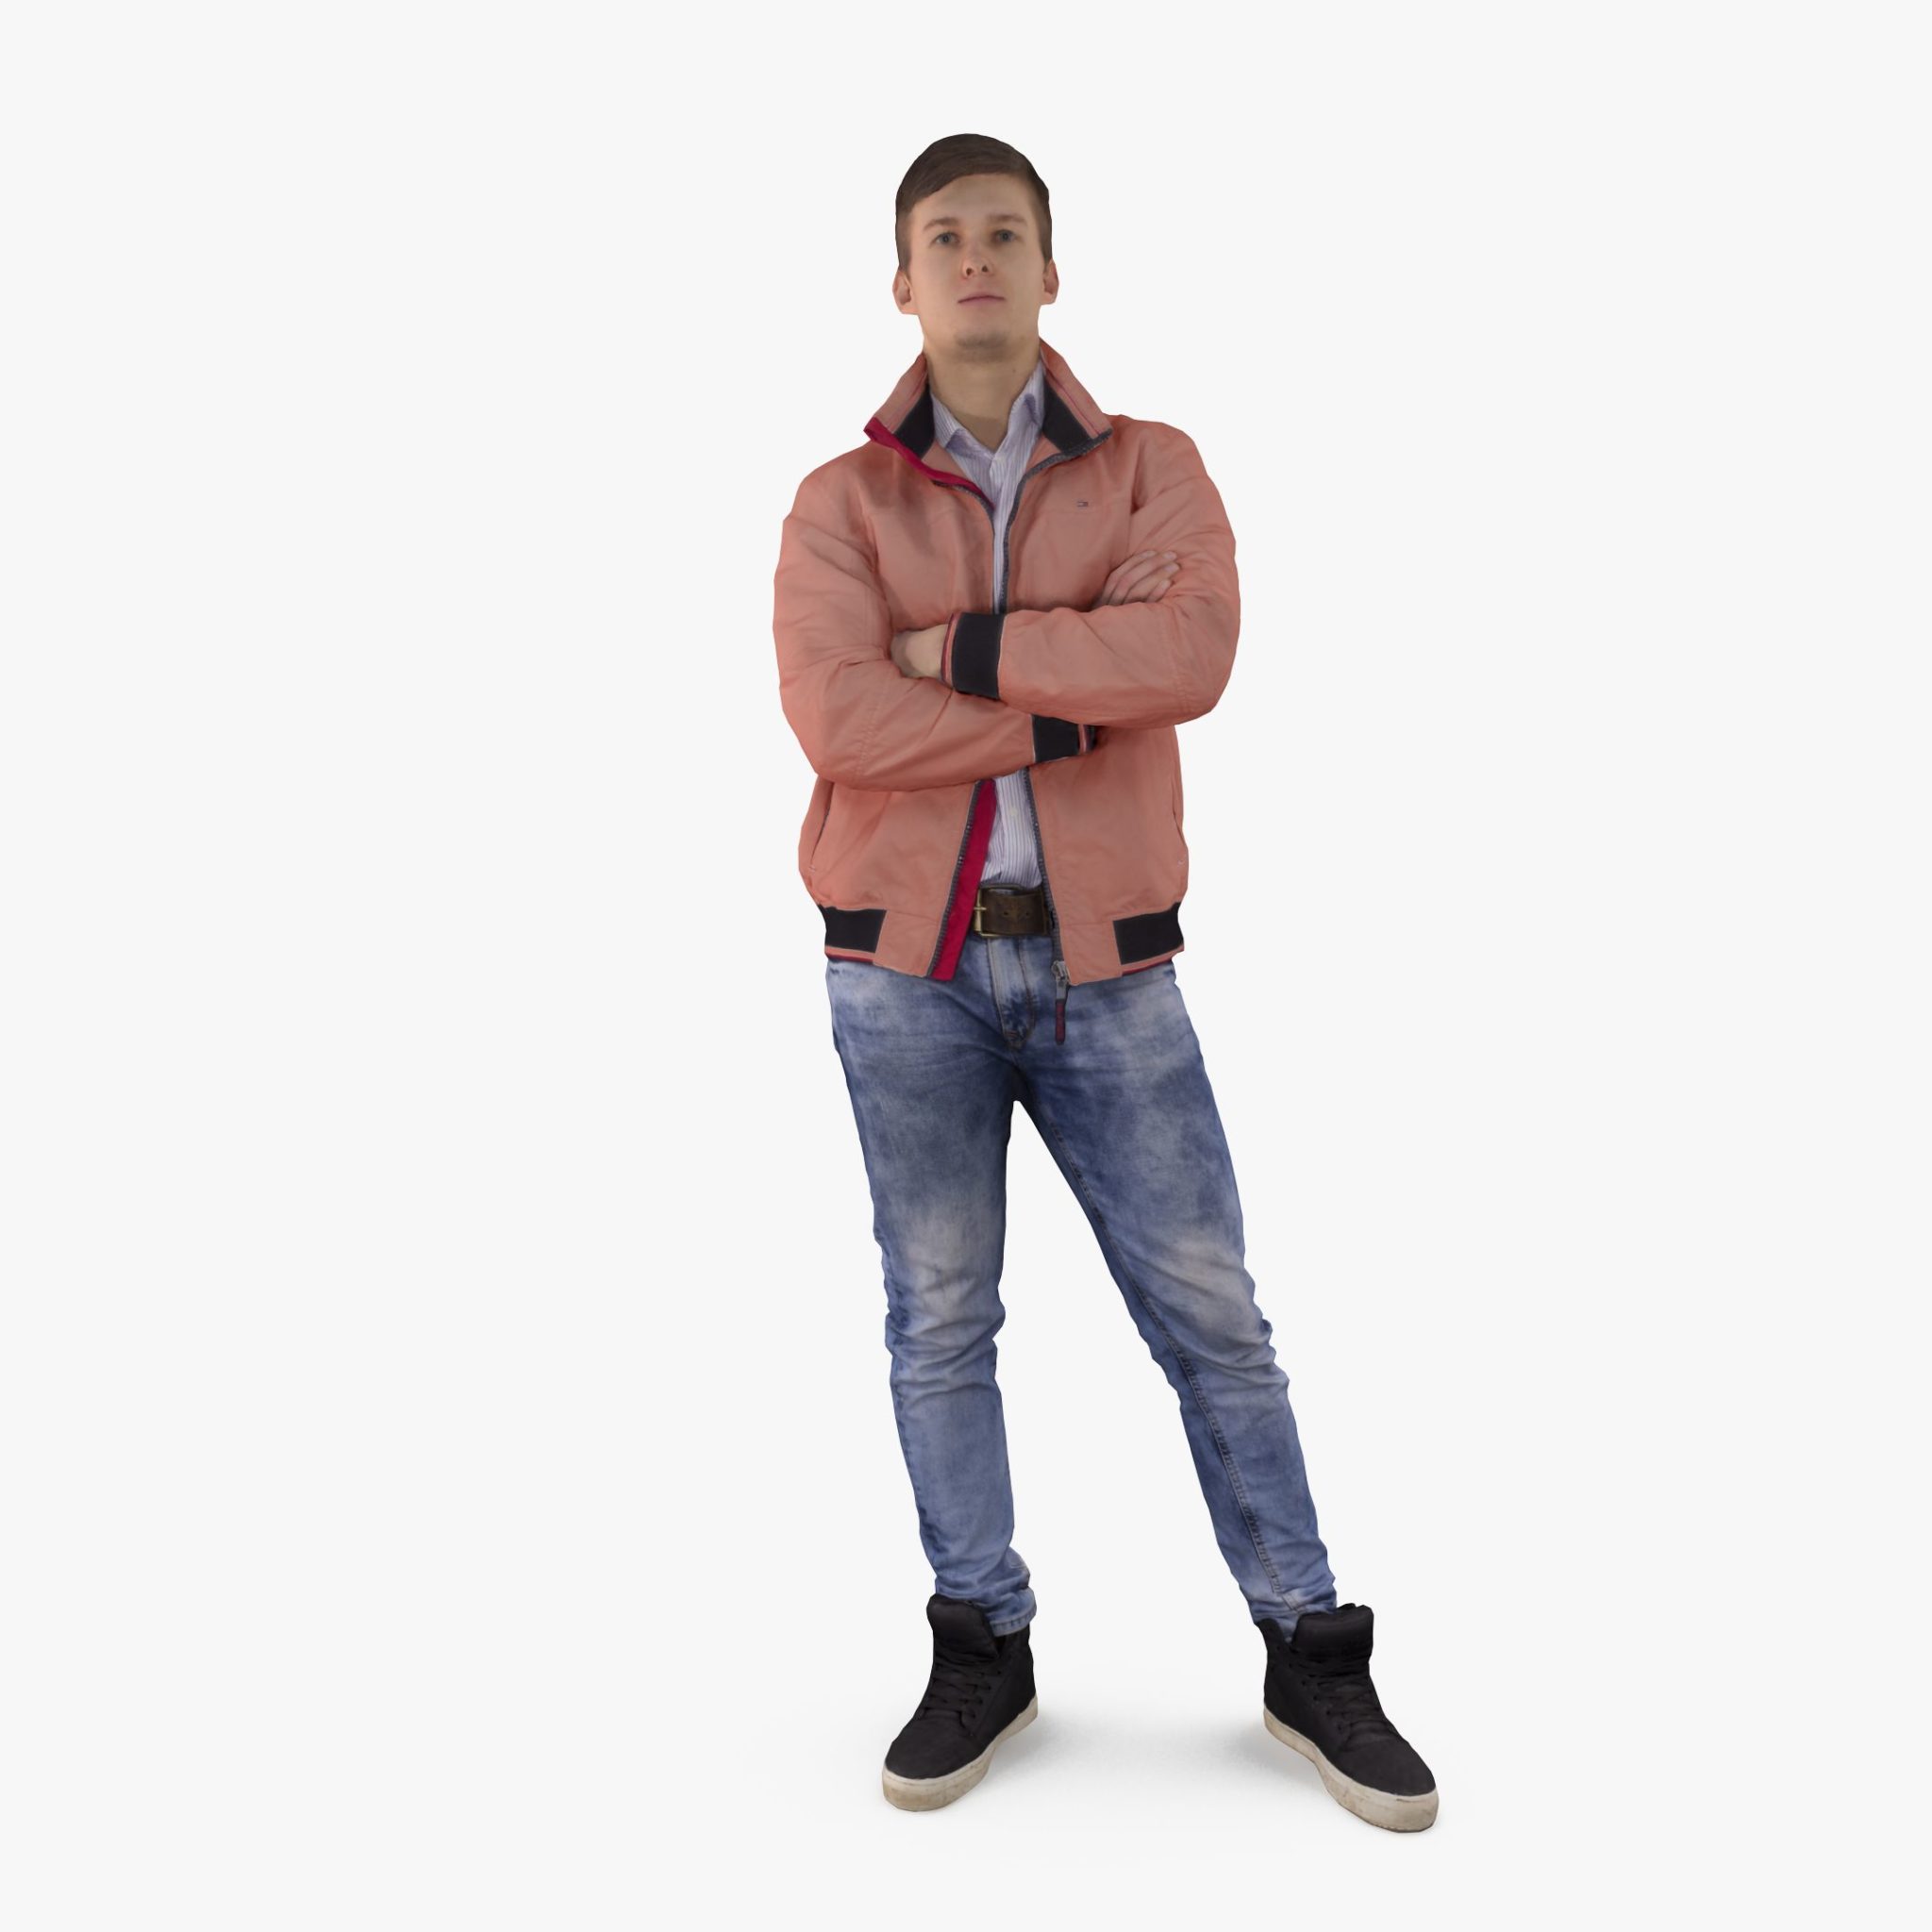 Urban Man in Jacket 3D Model | 3DTree Scanning Studio